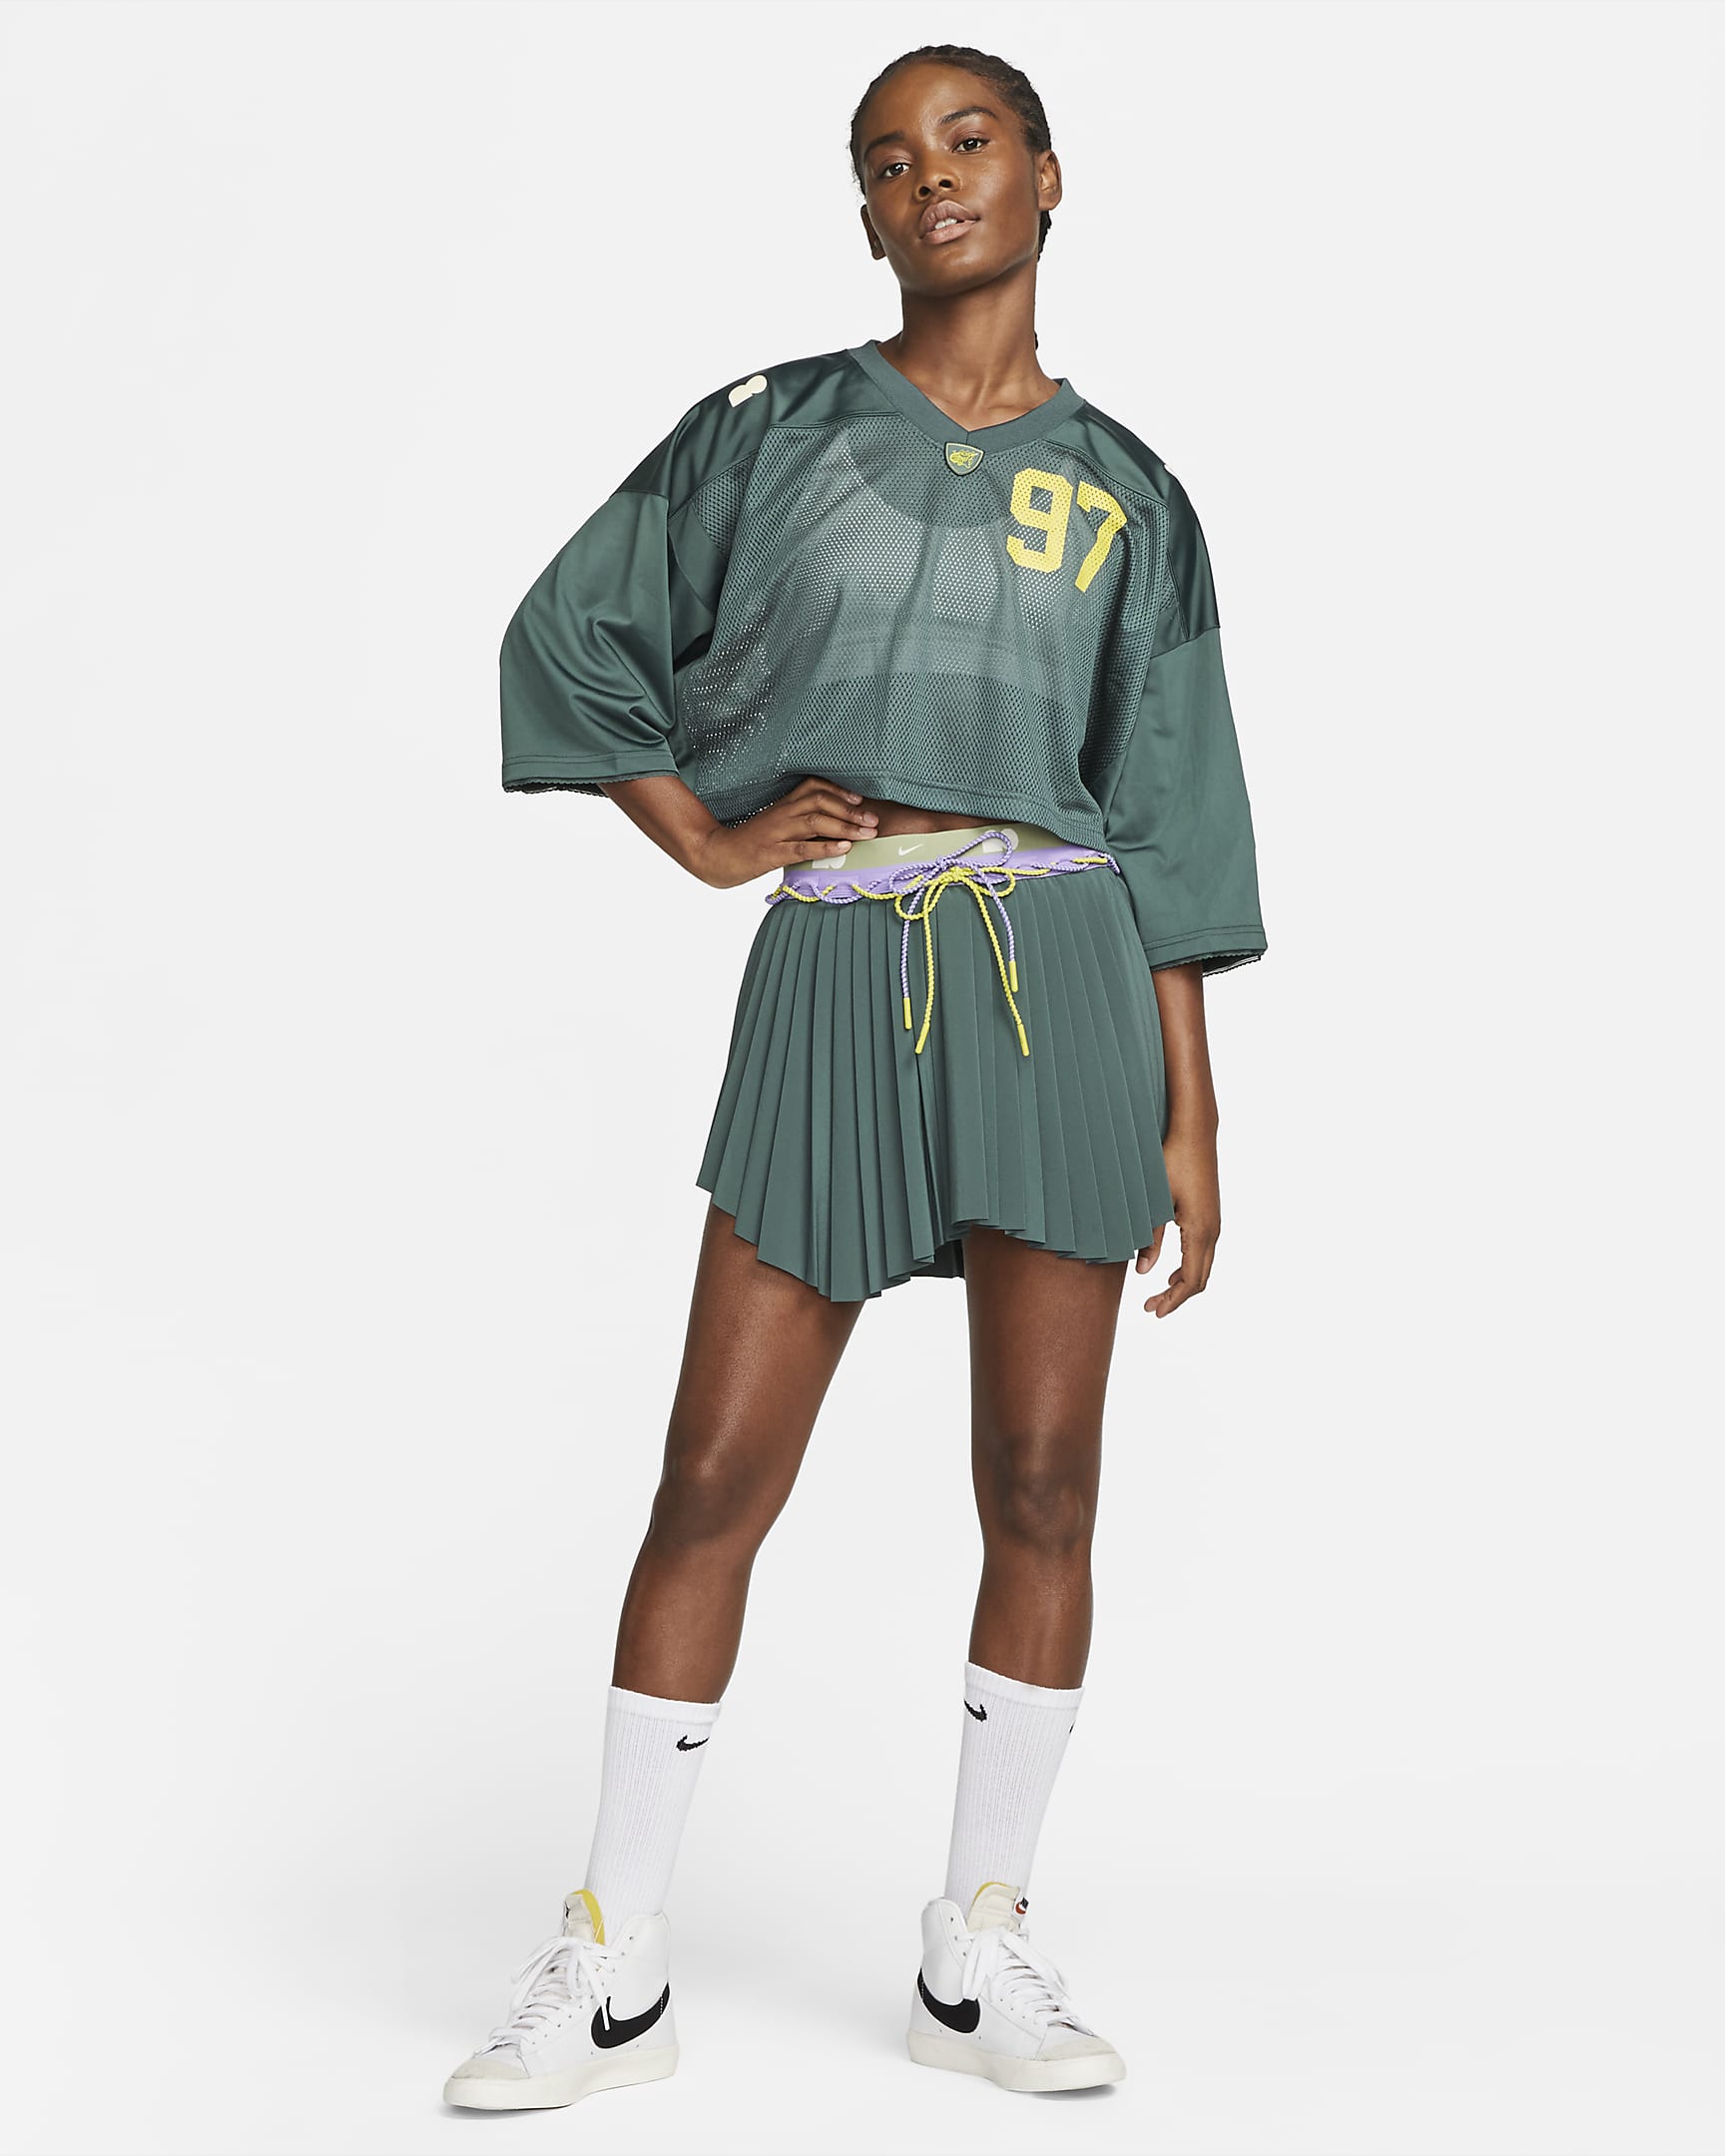 Naomi Osaka Women's Top. Nike ID